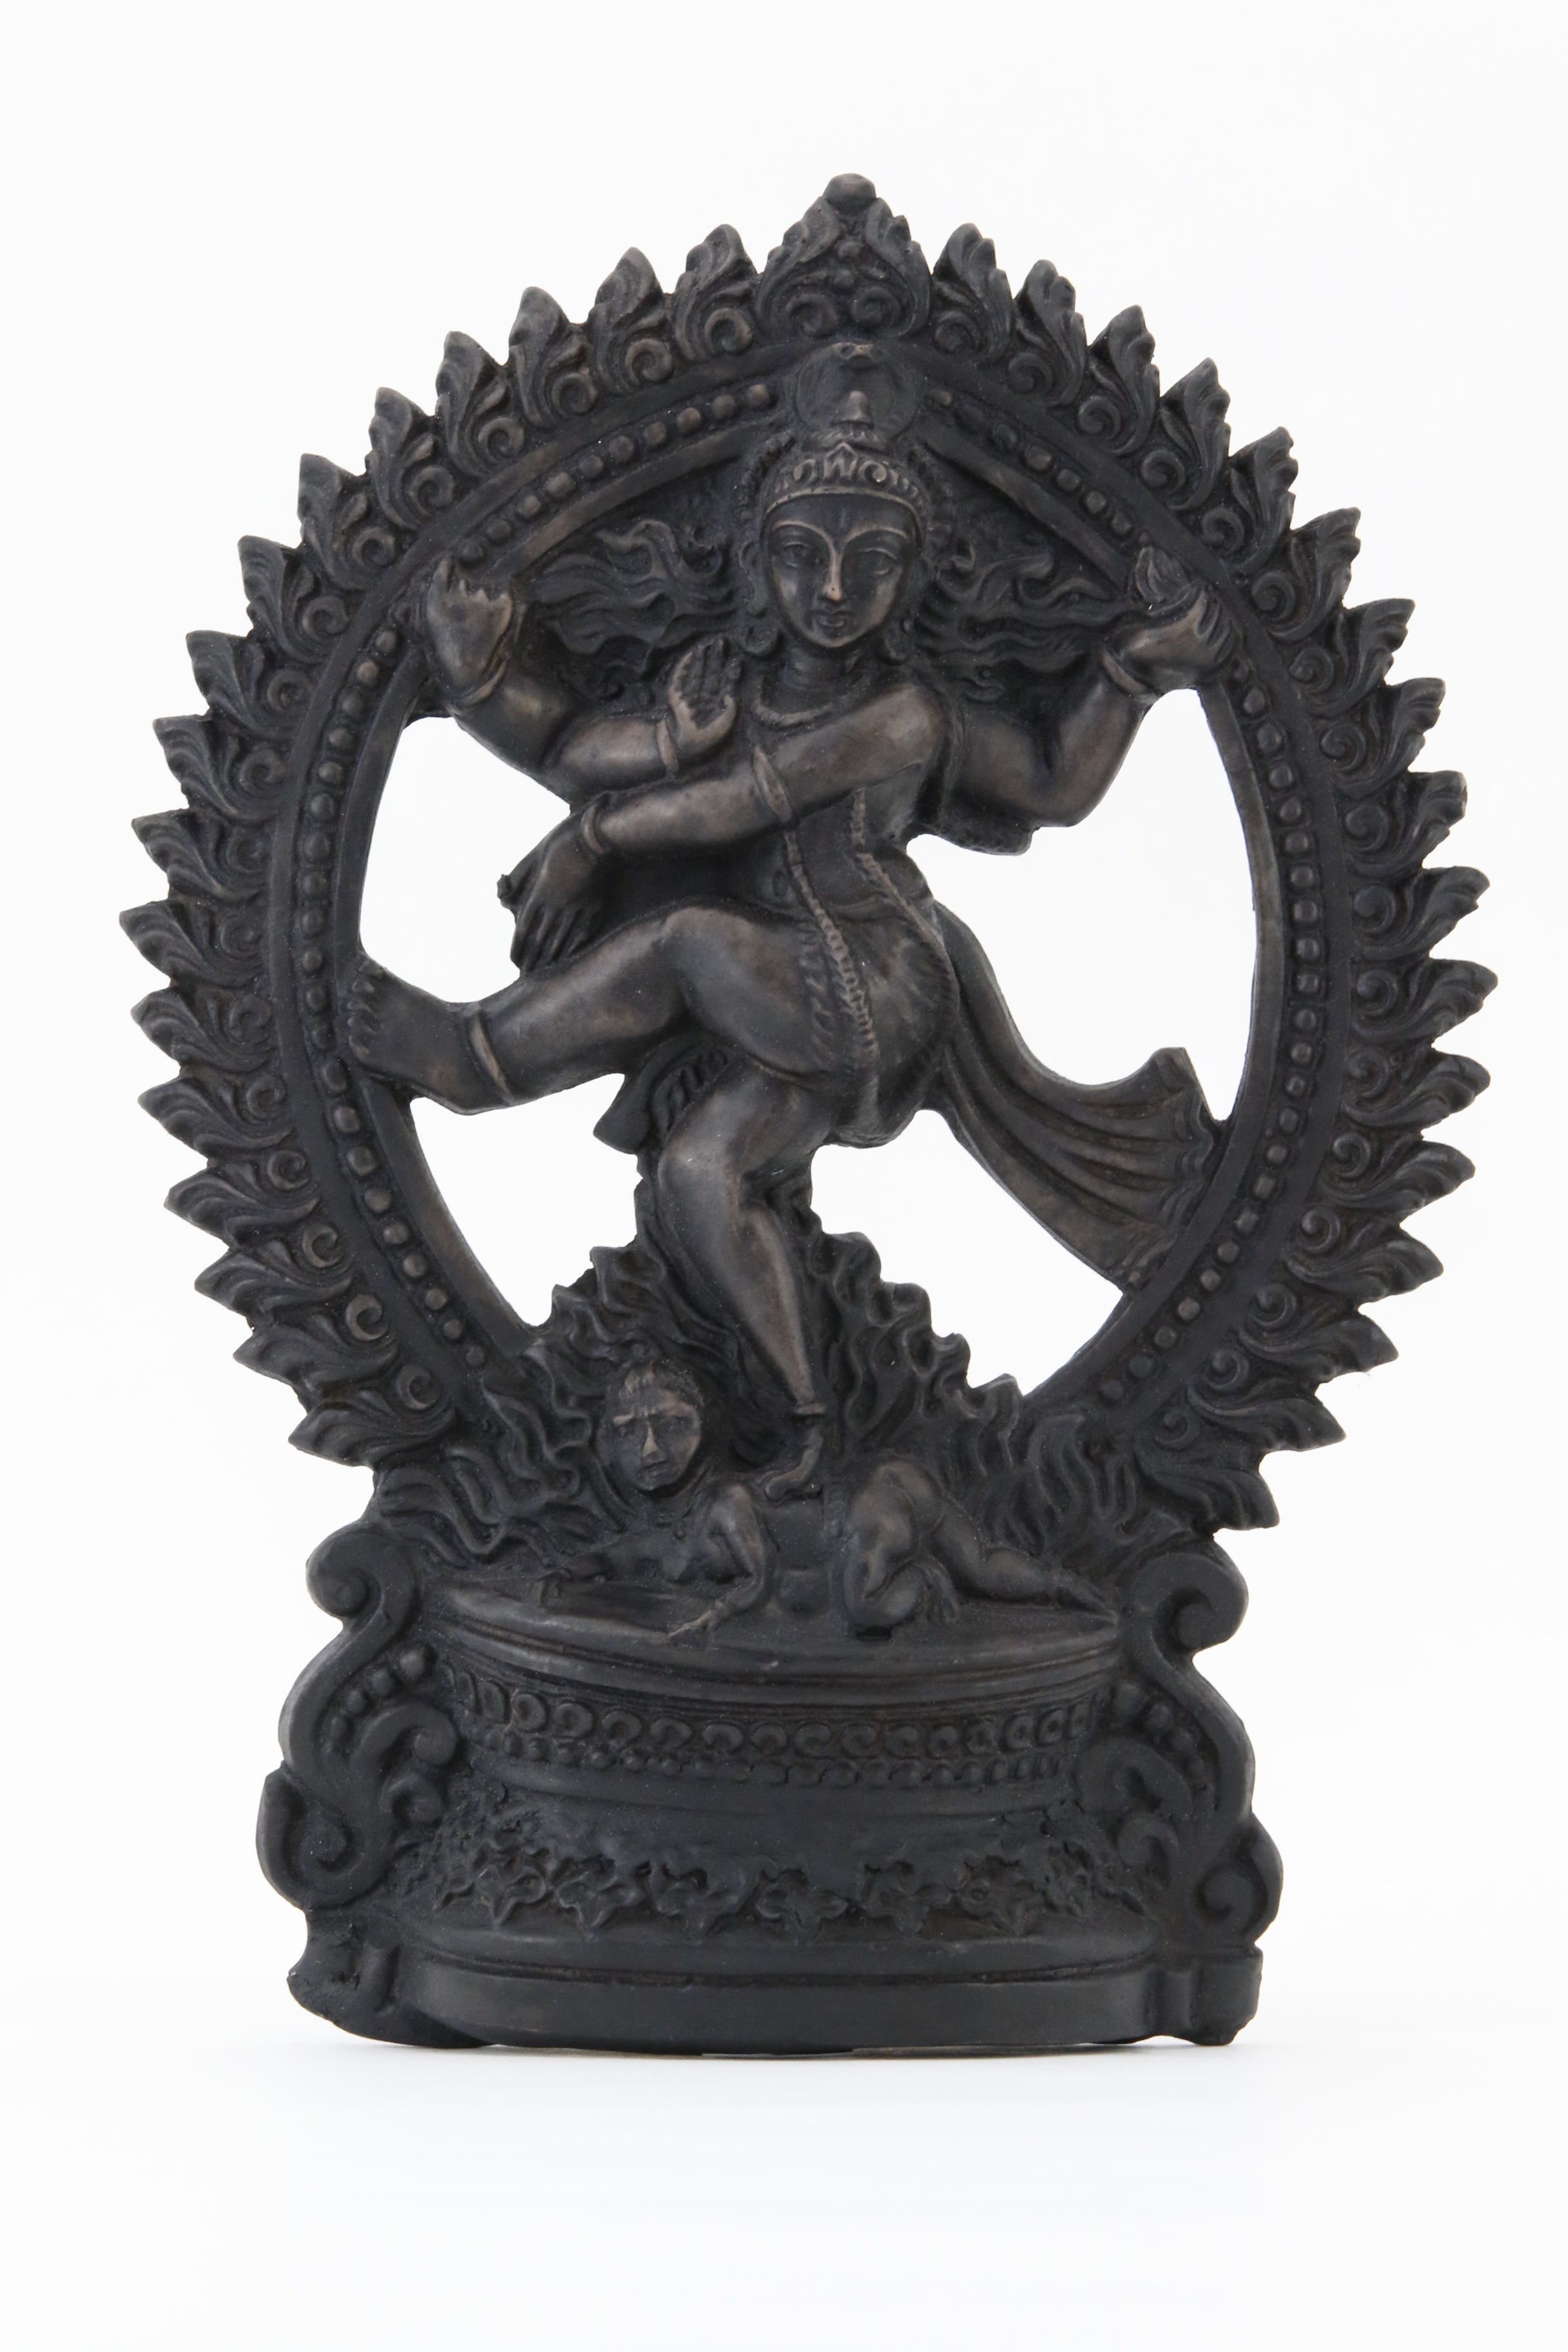 Firm Your Leg With Dancer Pose Nataraja - Ganesha Speaks